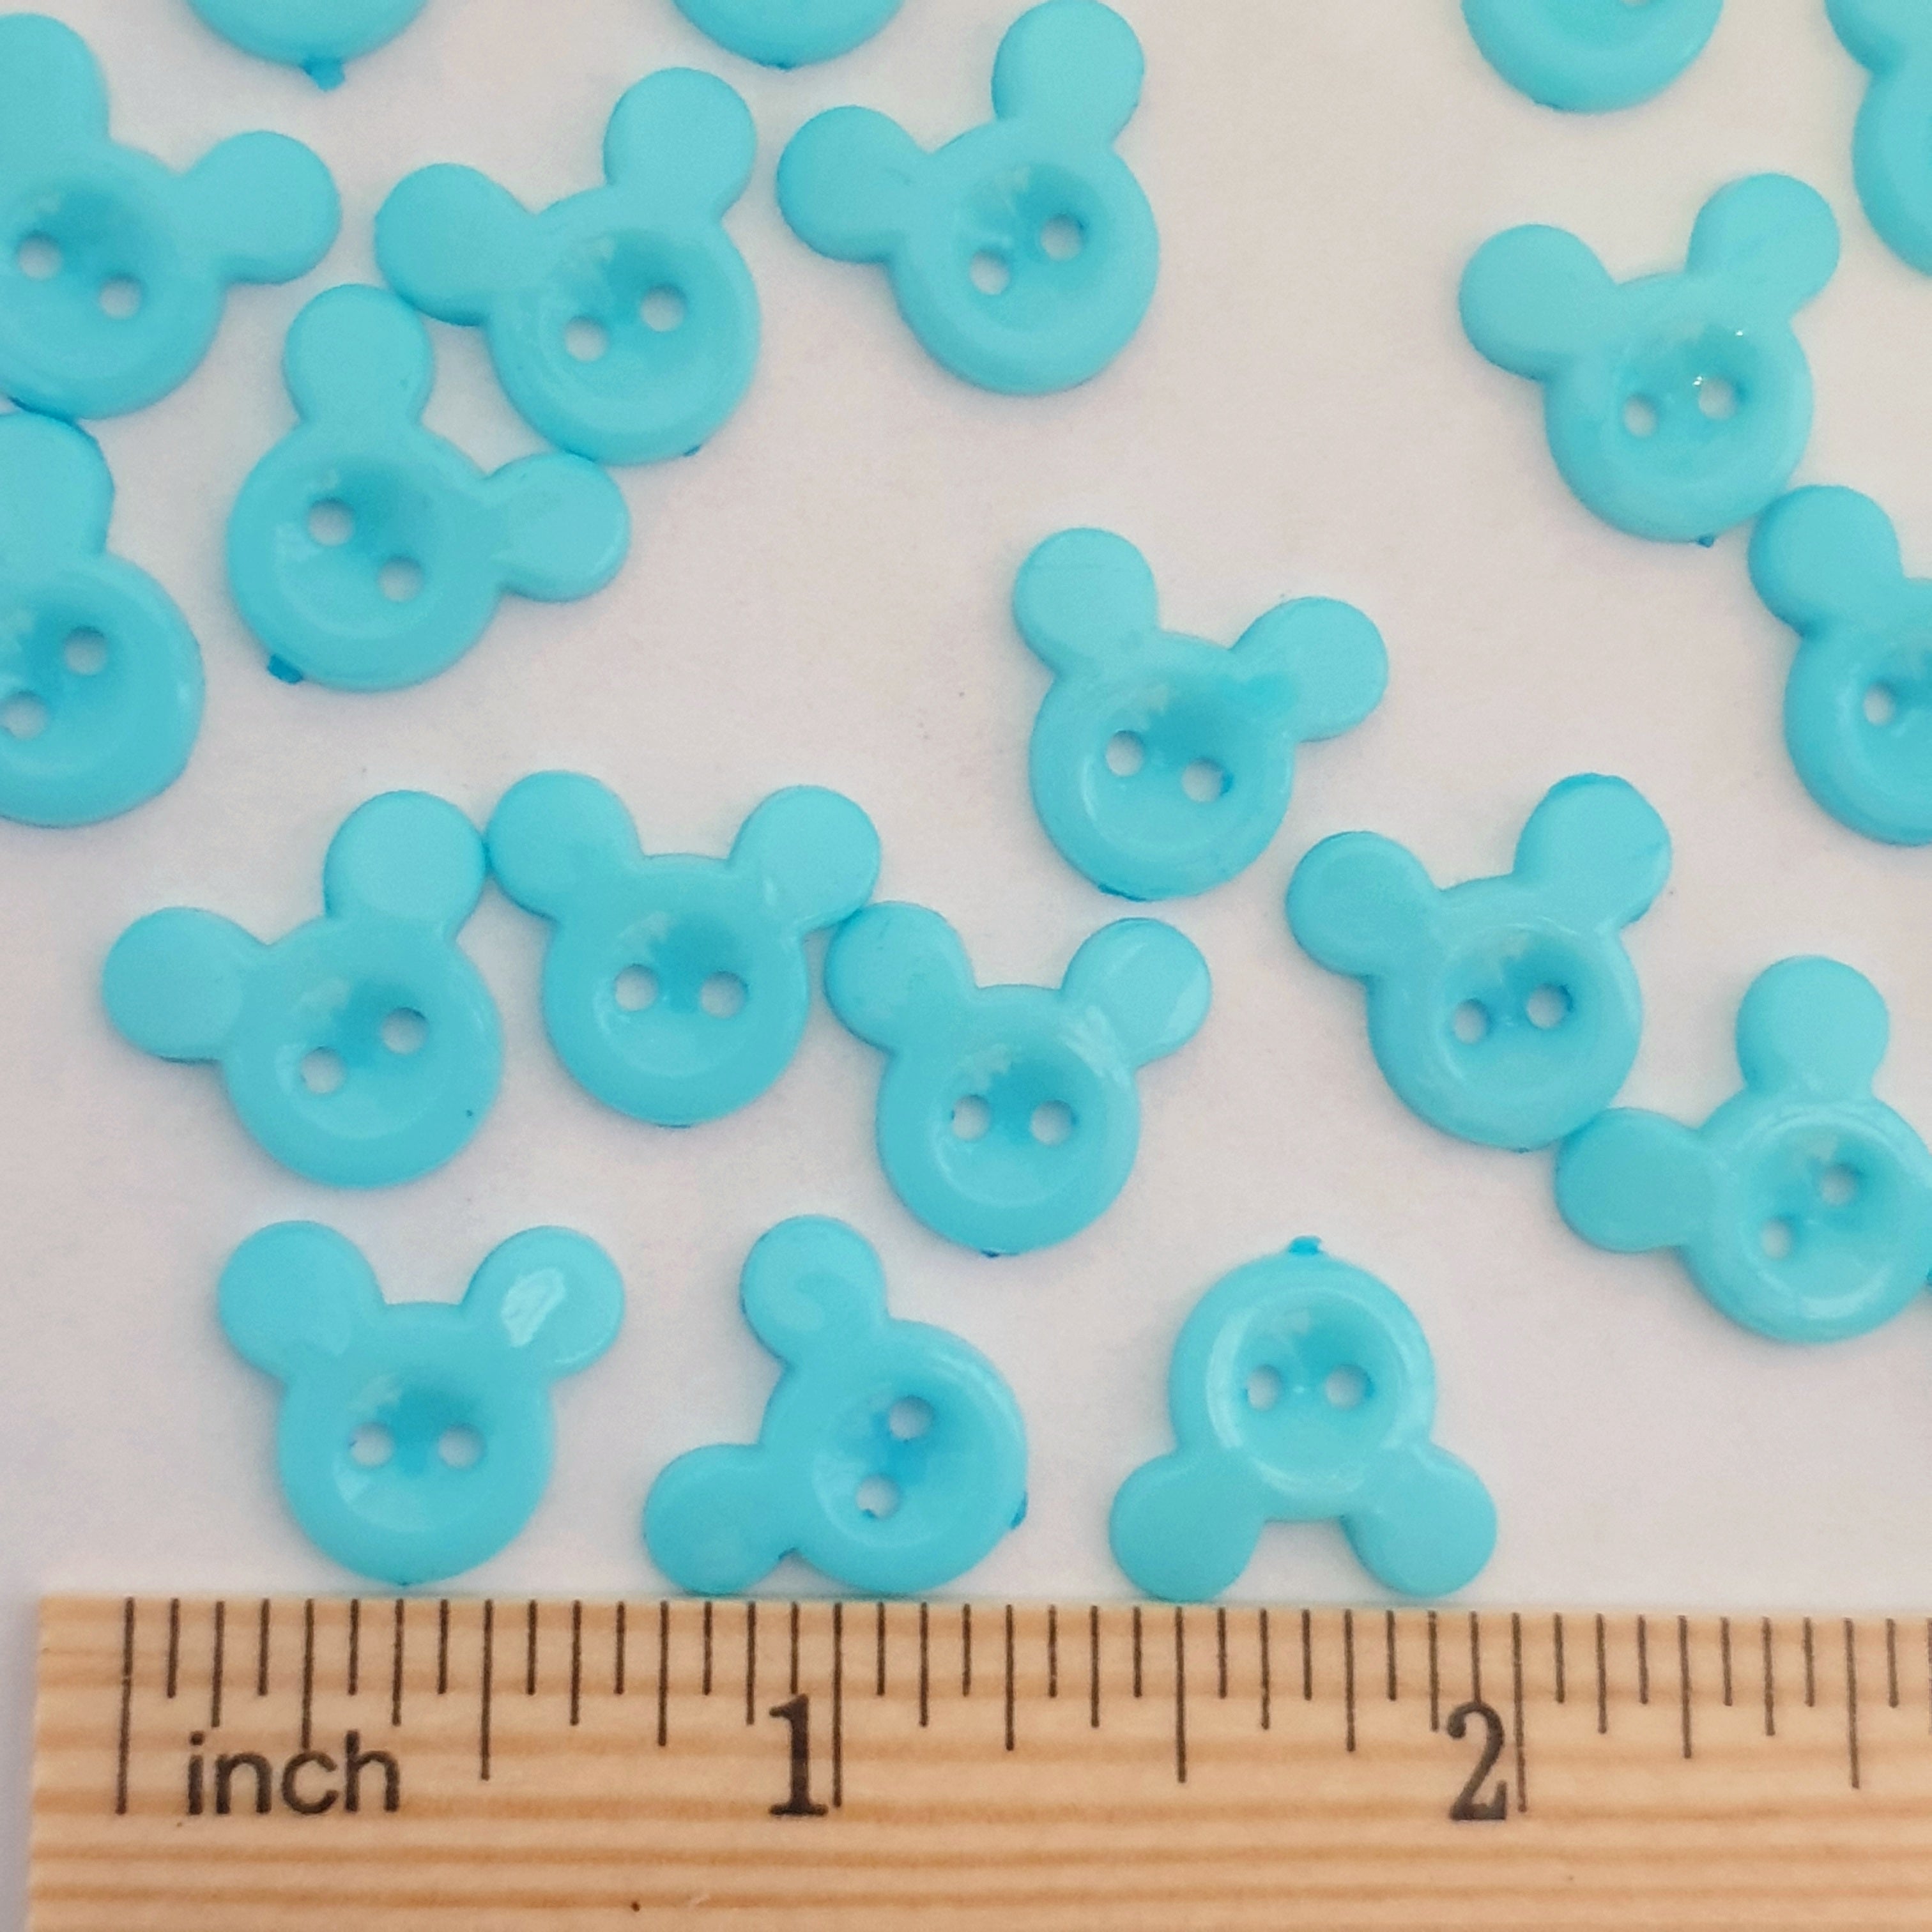 MajorCrafts 40pcs 15mm Aqua Blue Mouse Shaped 2 Holes Resin Sewing Buttons